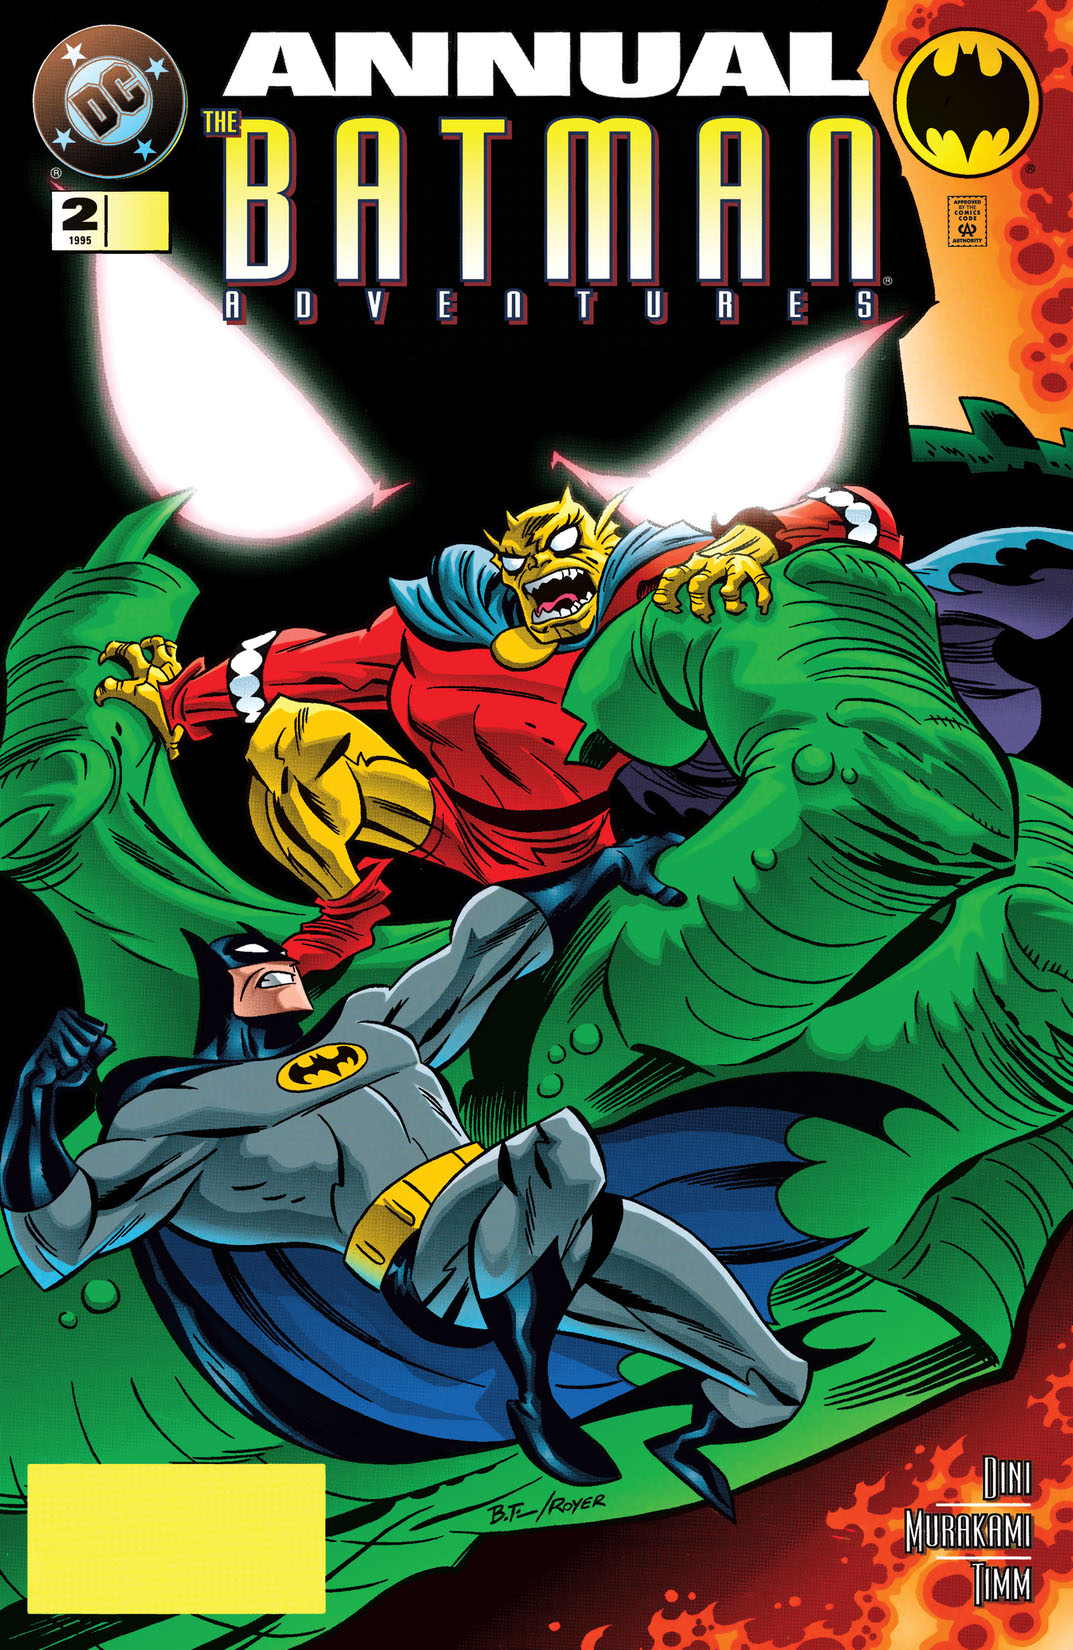 The Batman Adventures Annual #2 preview images